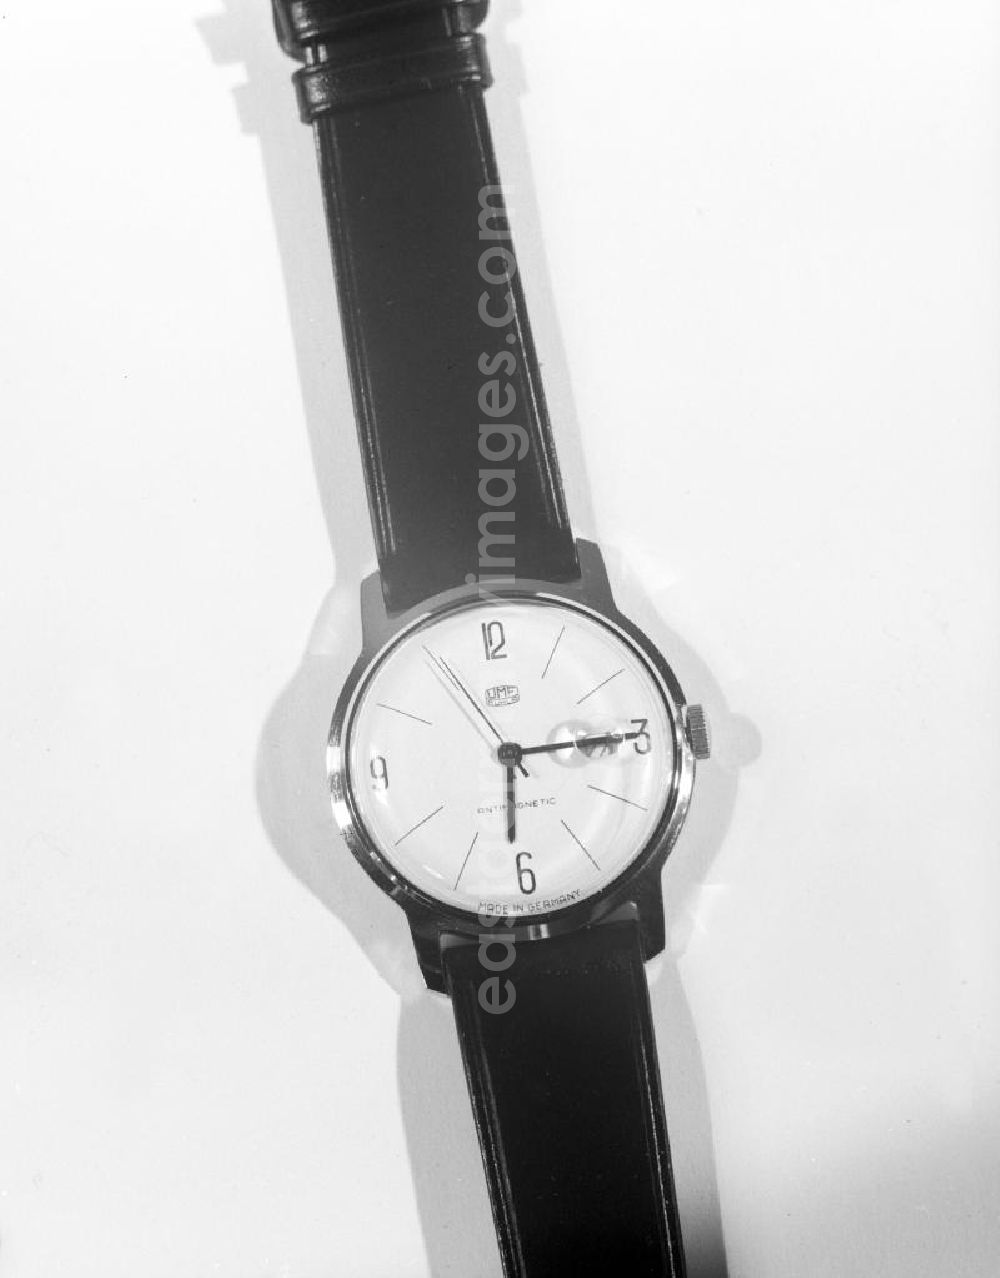 GDR photo archive: Ruhla - Blick auf eine Armbanduhr aus dem VEB Uhrenwerke Ruhla.